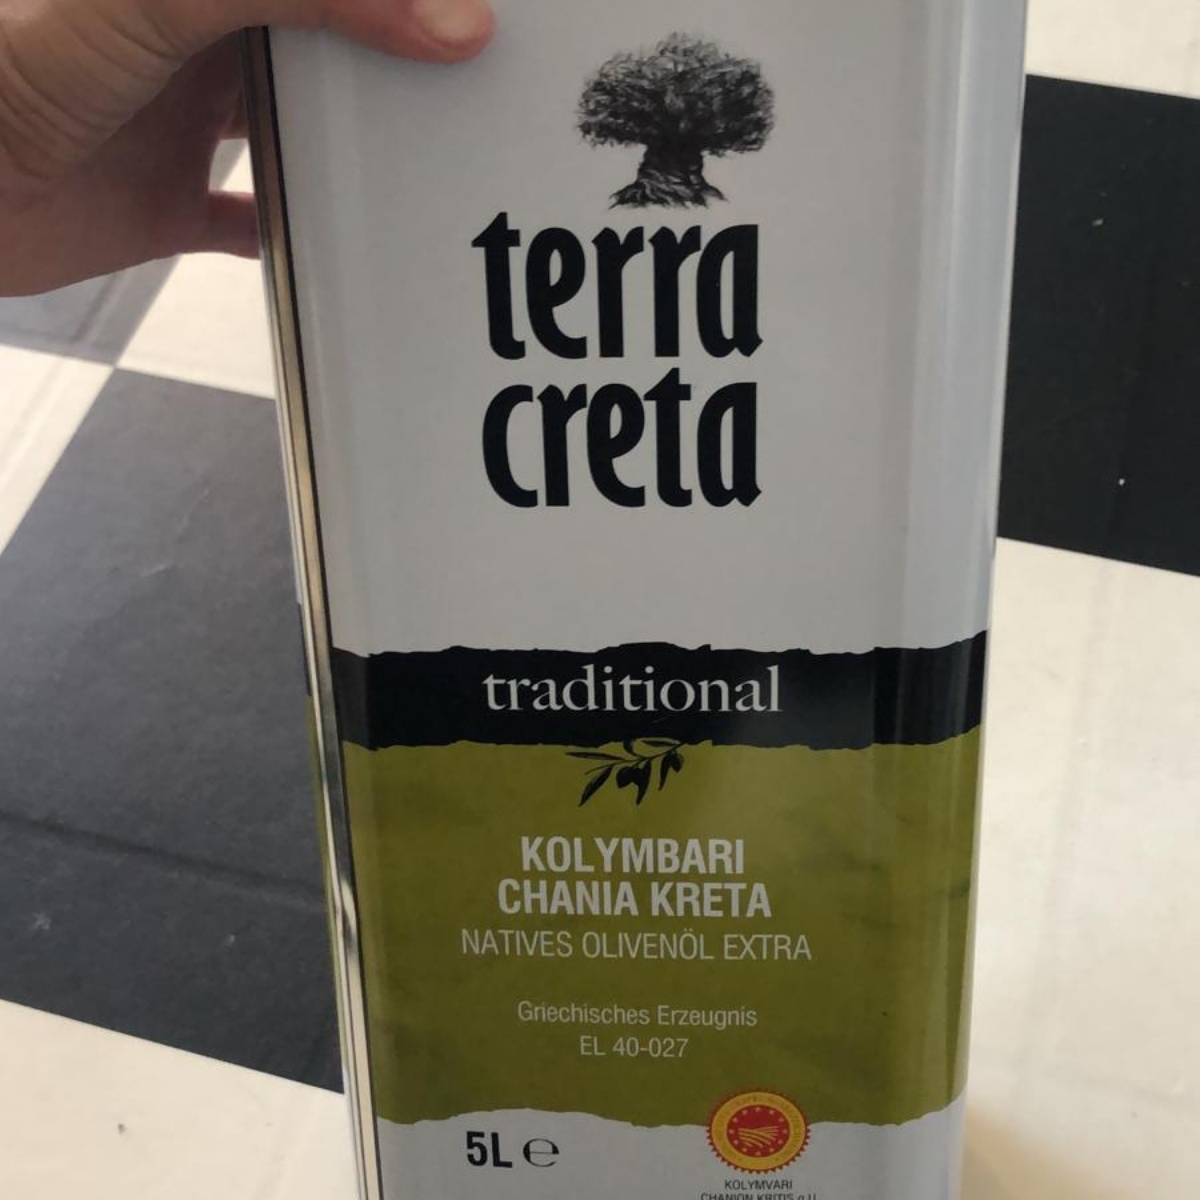 Terra creta Olive oil Review